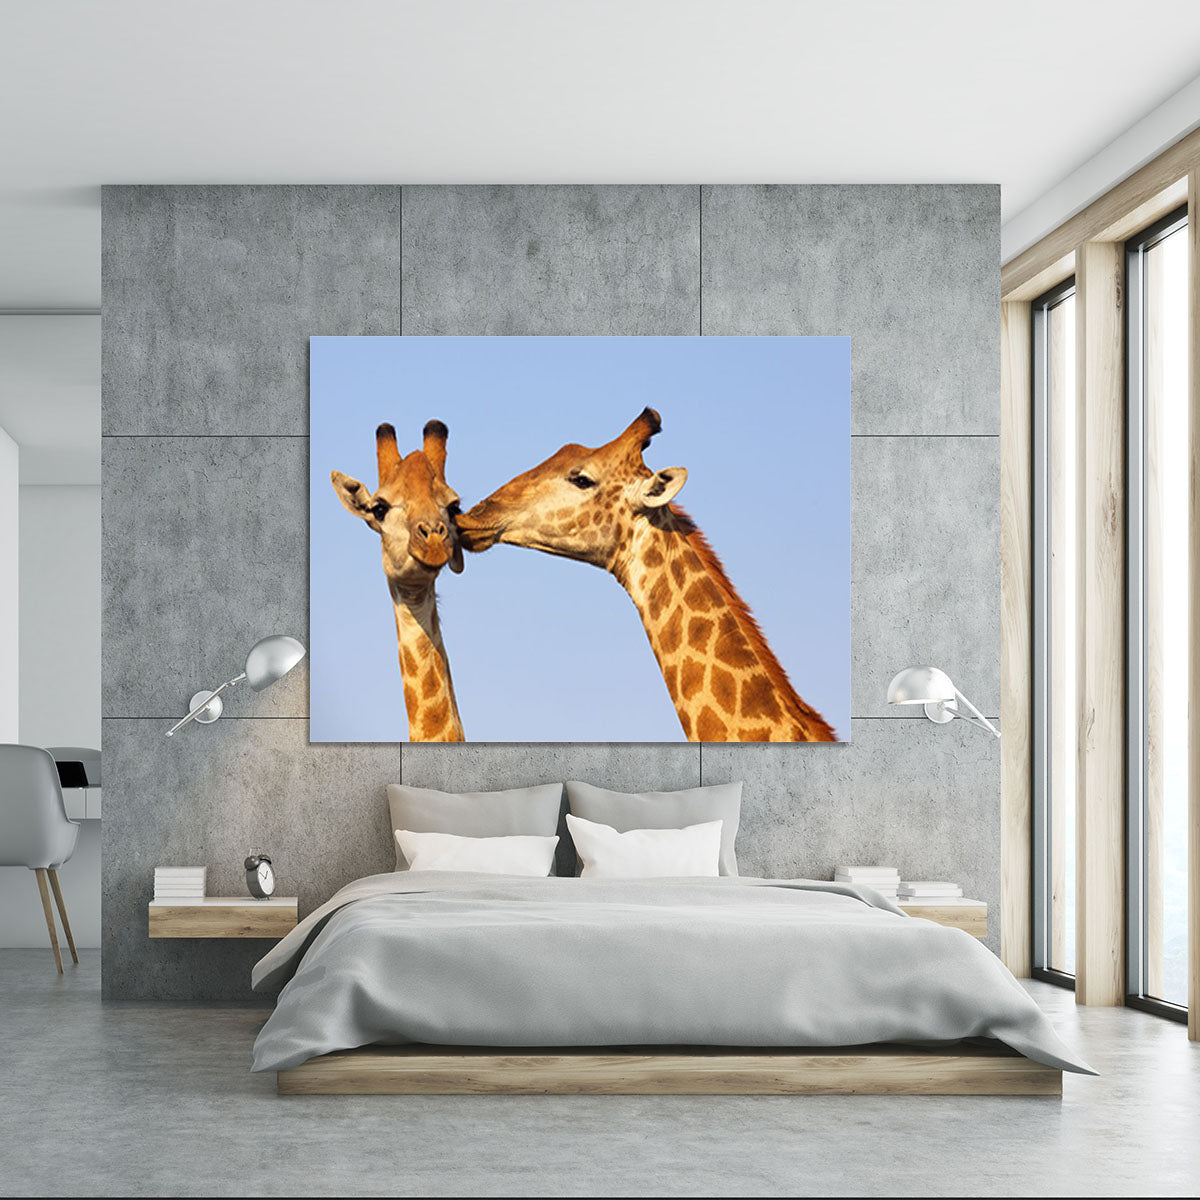 Giraffe pair bonding Canvas Print or Poster - Canvas Art Rocks - 5